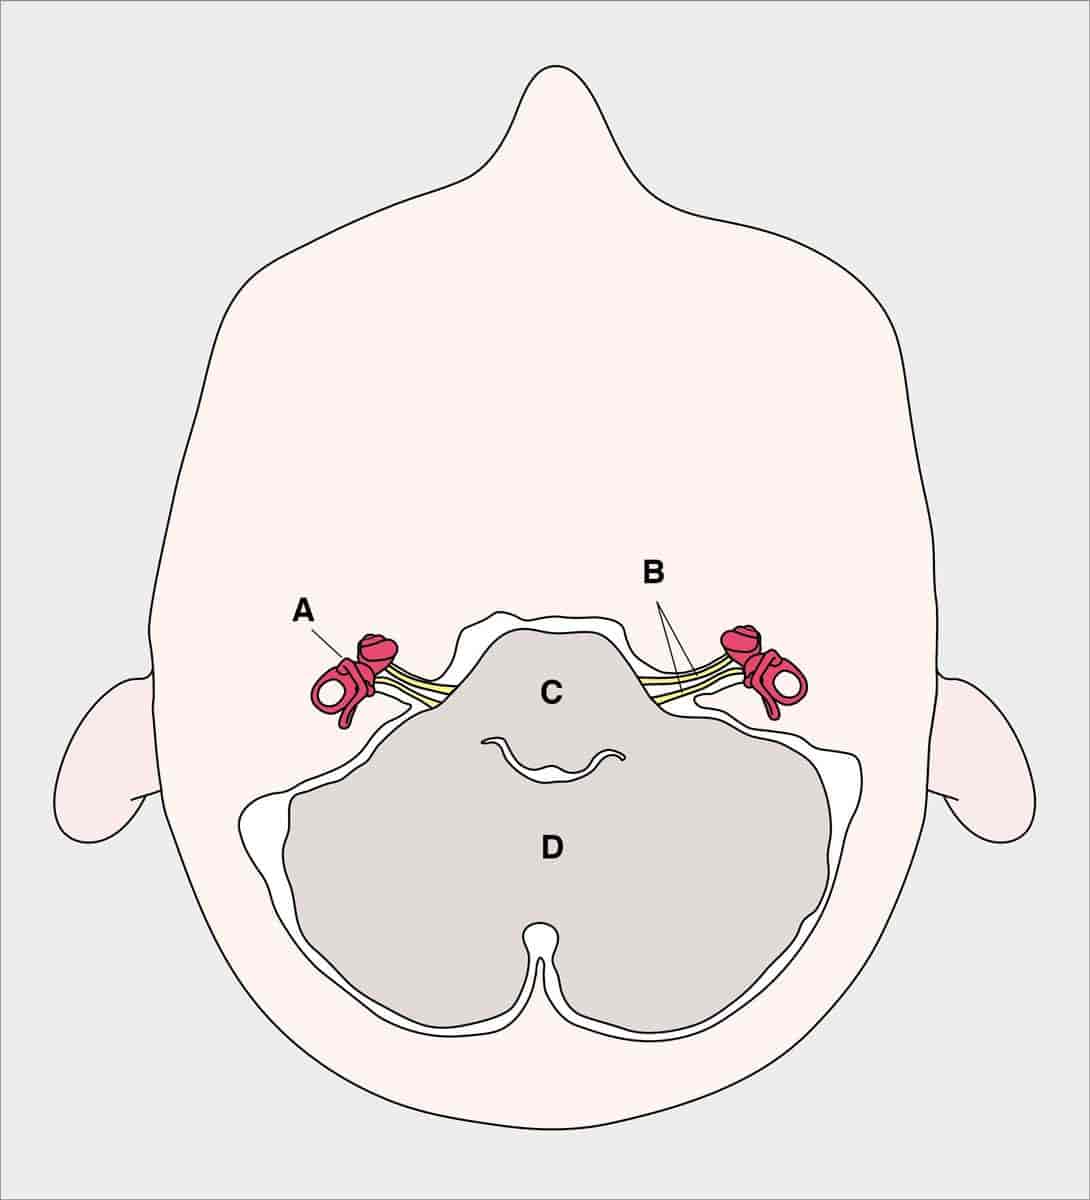 Balanseorganets plassering i hodet